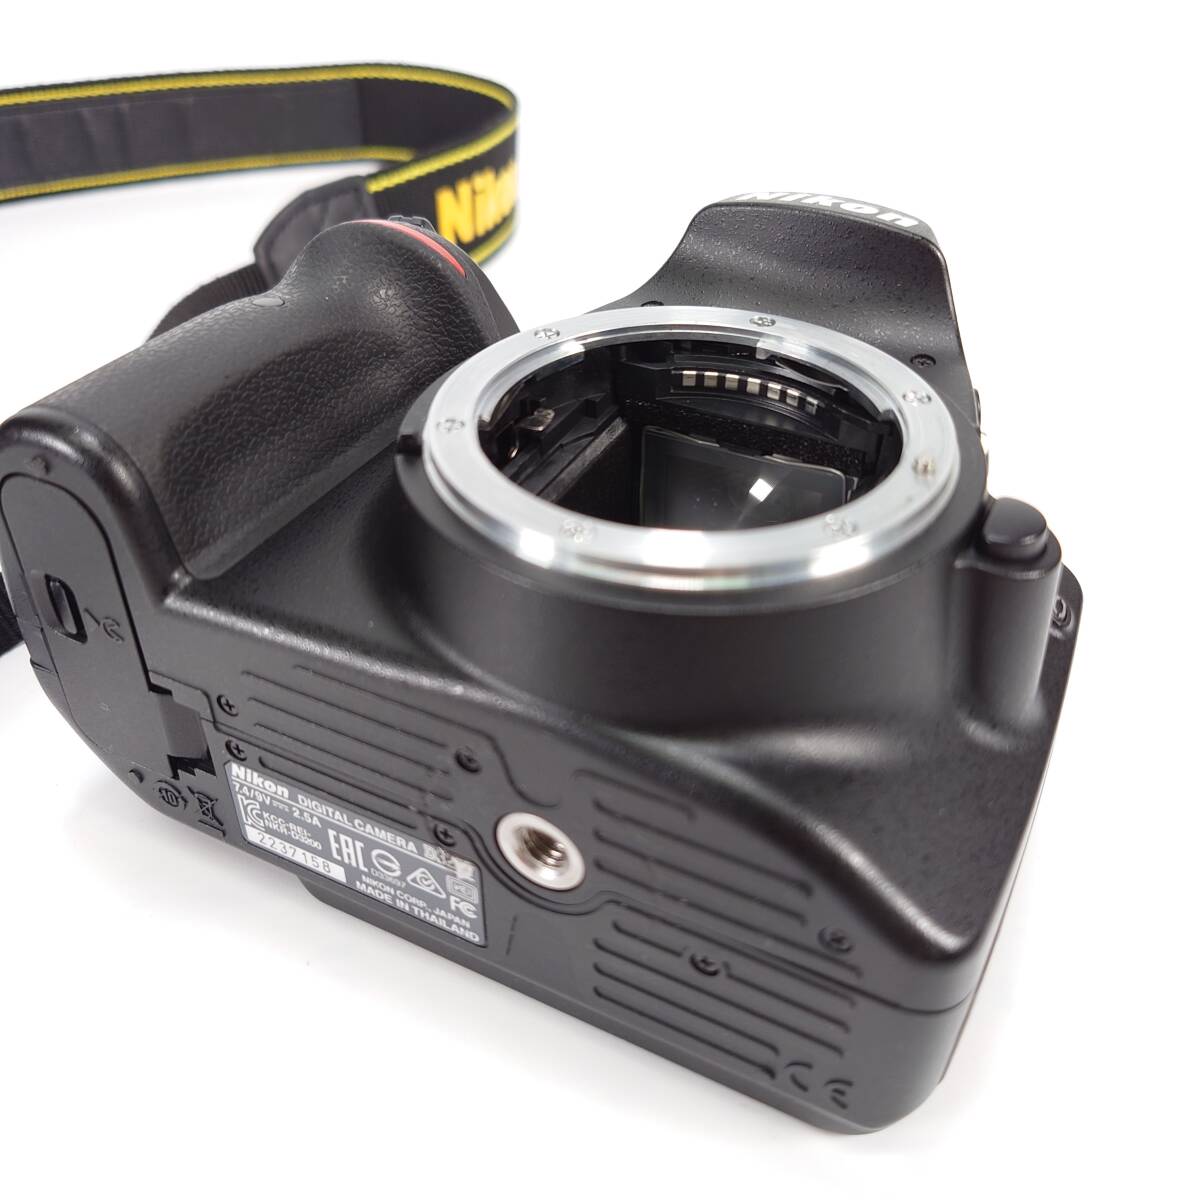 Nikon D3200 ダブルズームキット 55-200mm 18-55mm レンズ ニコン ...